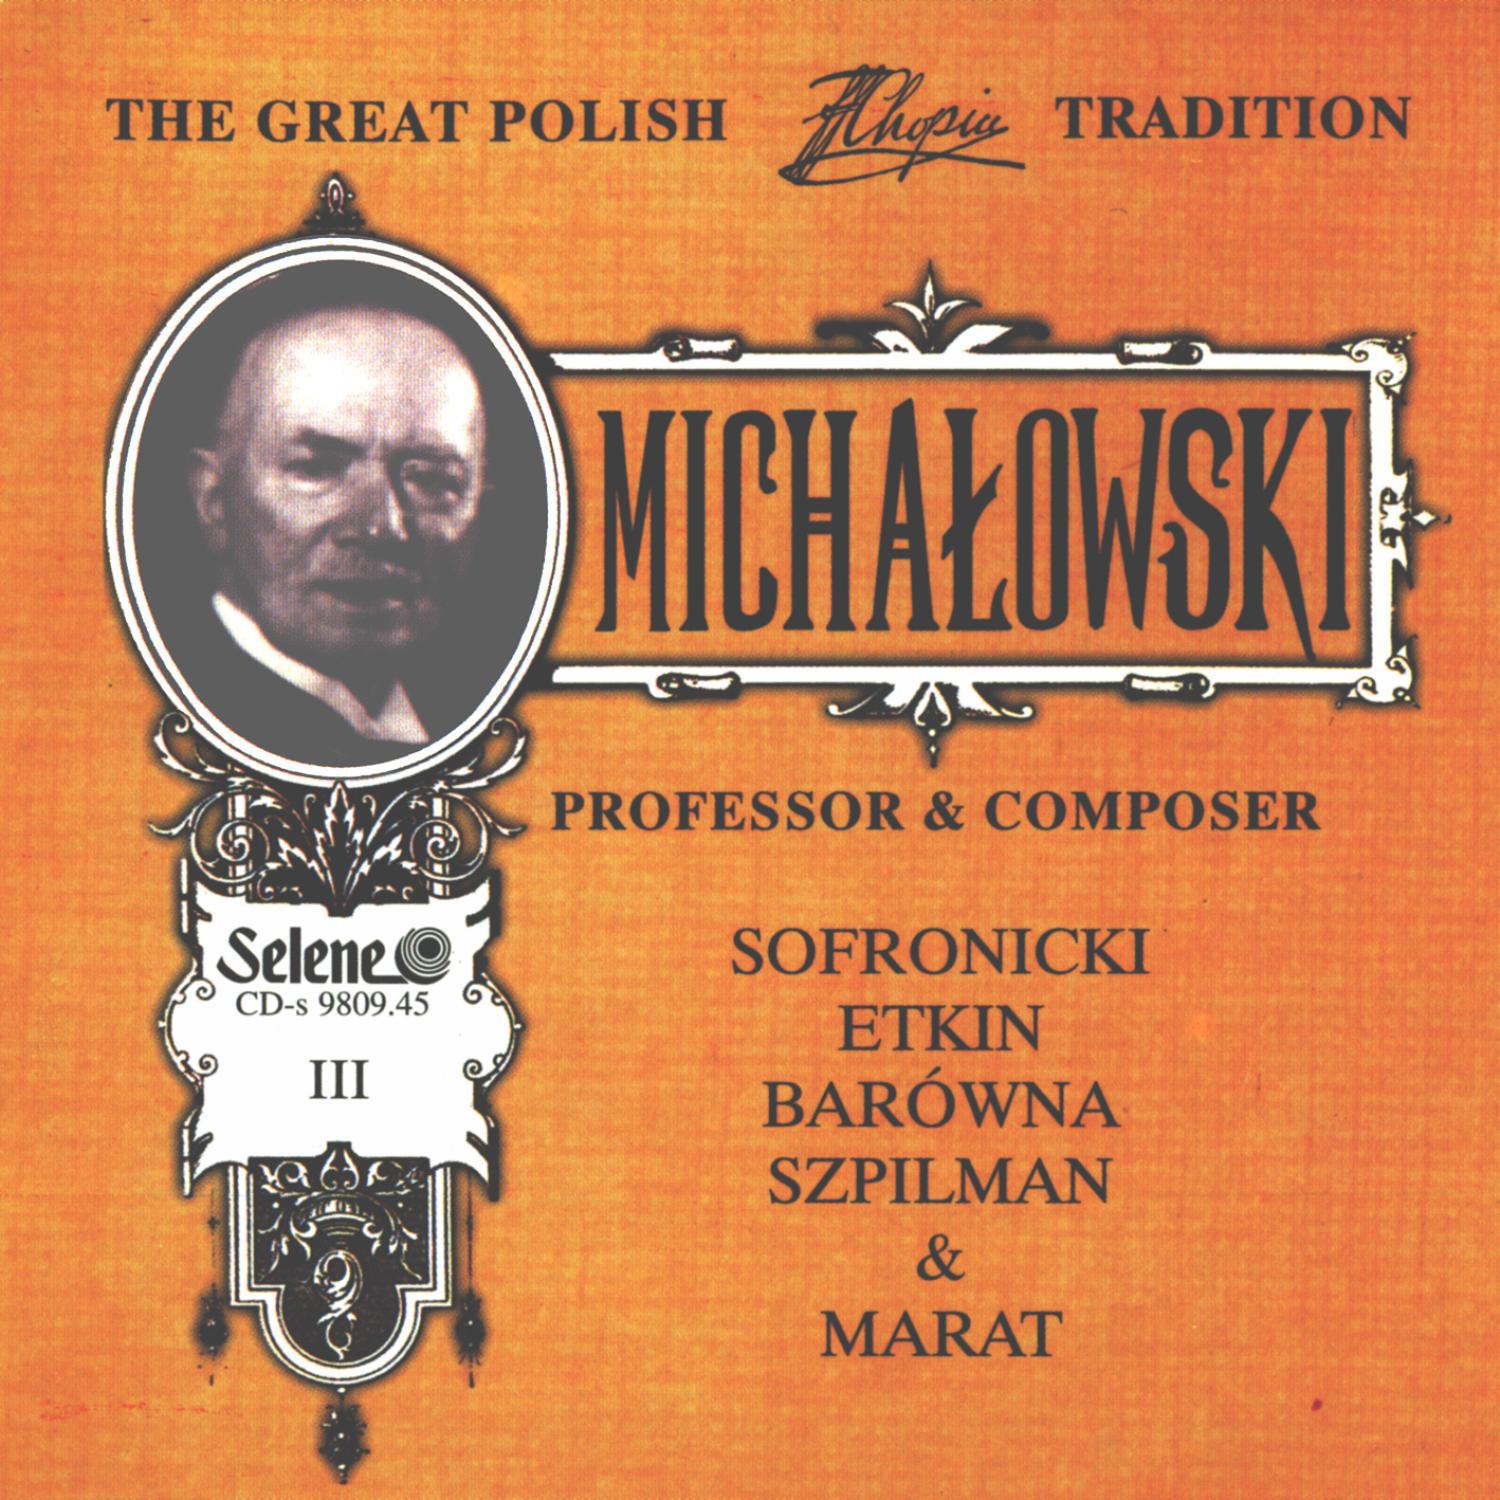 Mazurka in A minor, Op. 17 No. 4